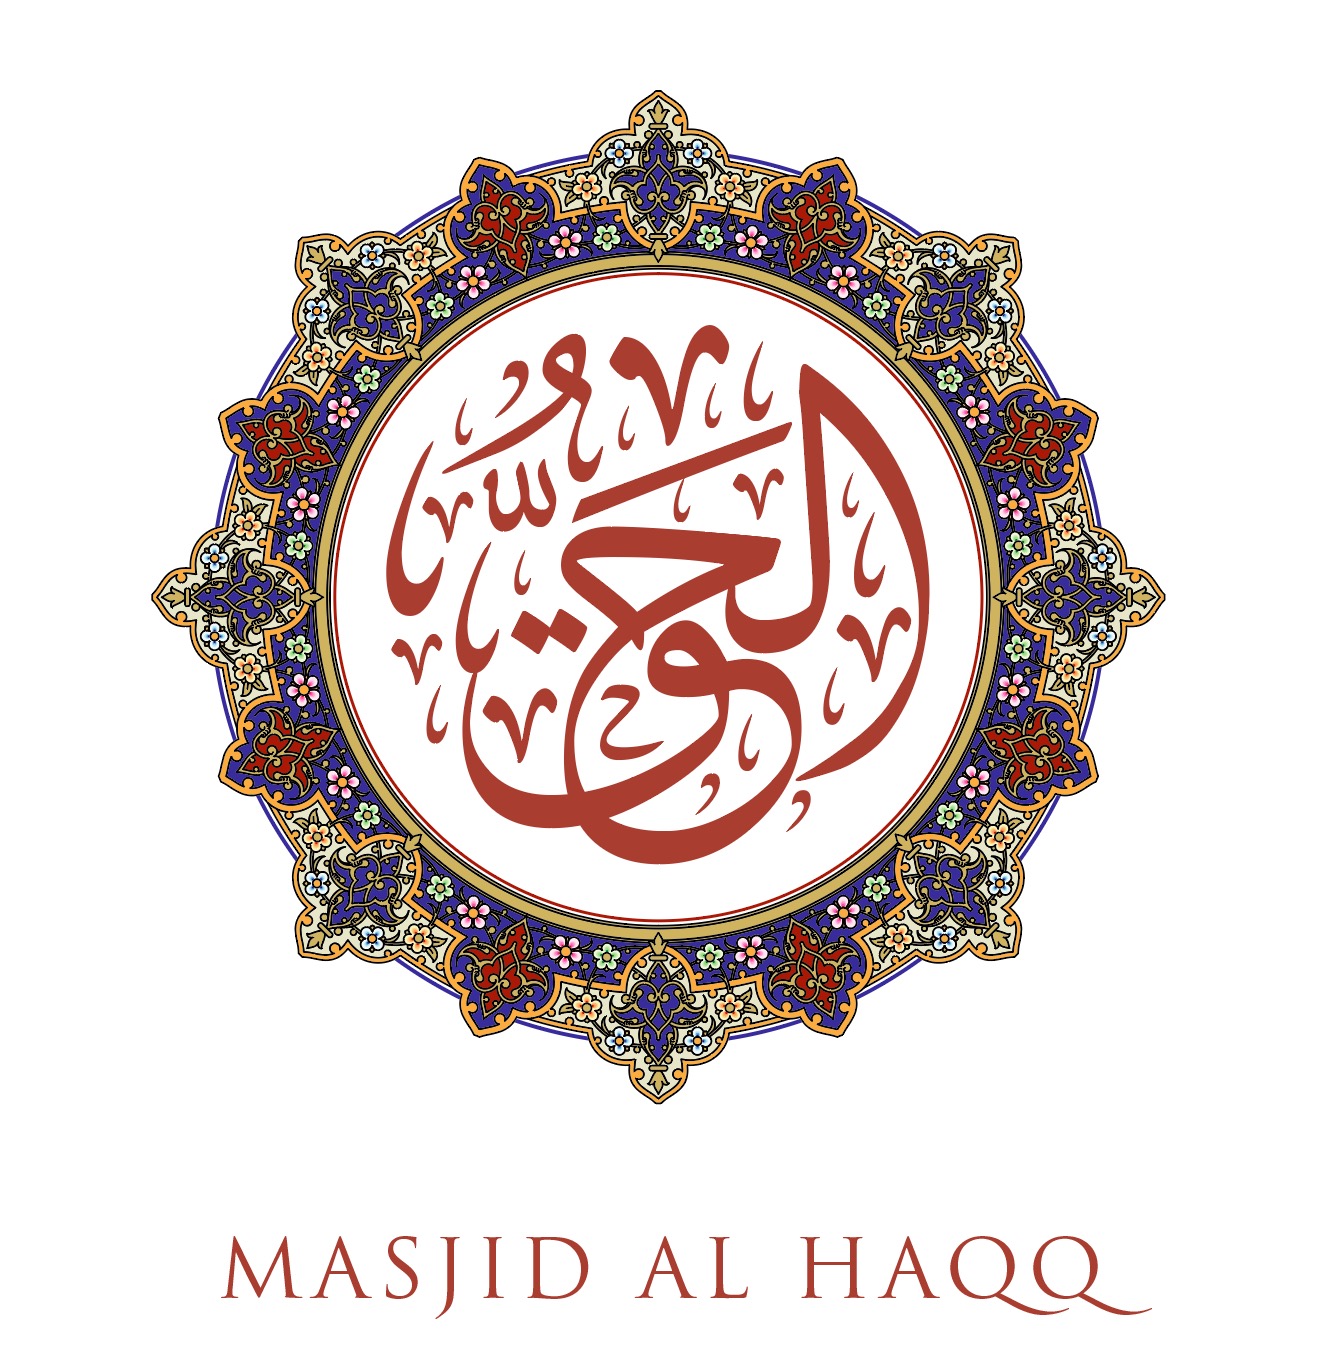 Masjid Ul Haqq logo